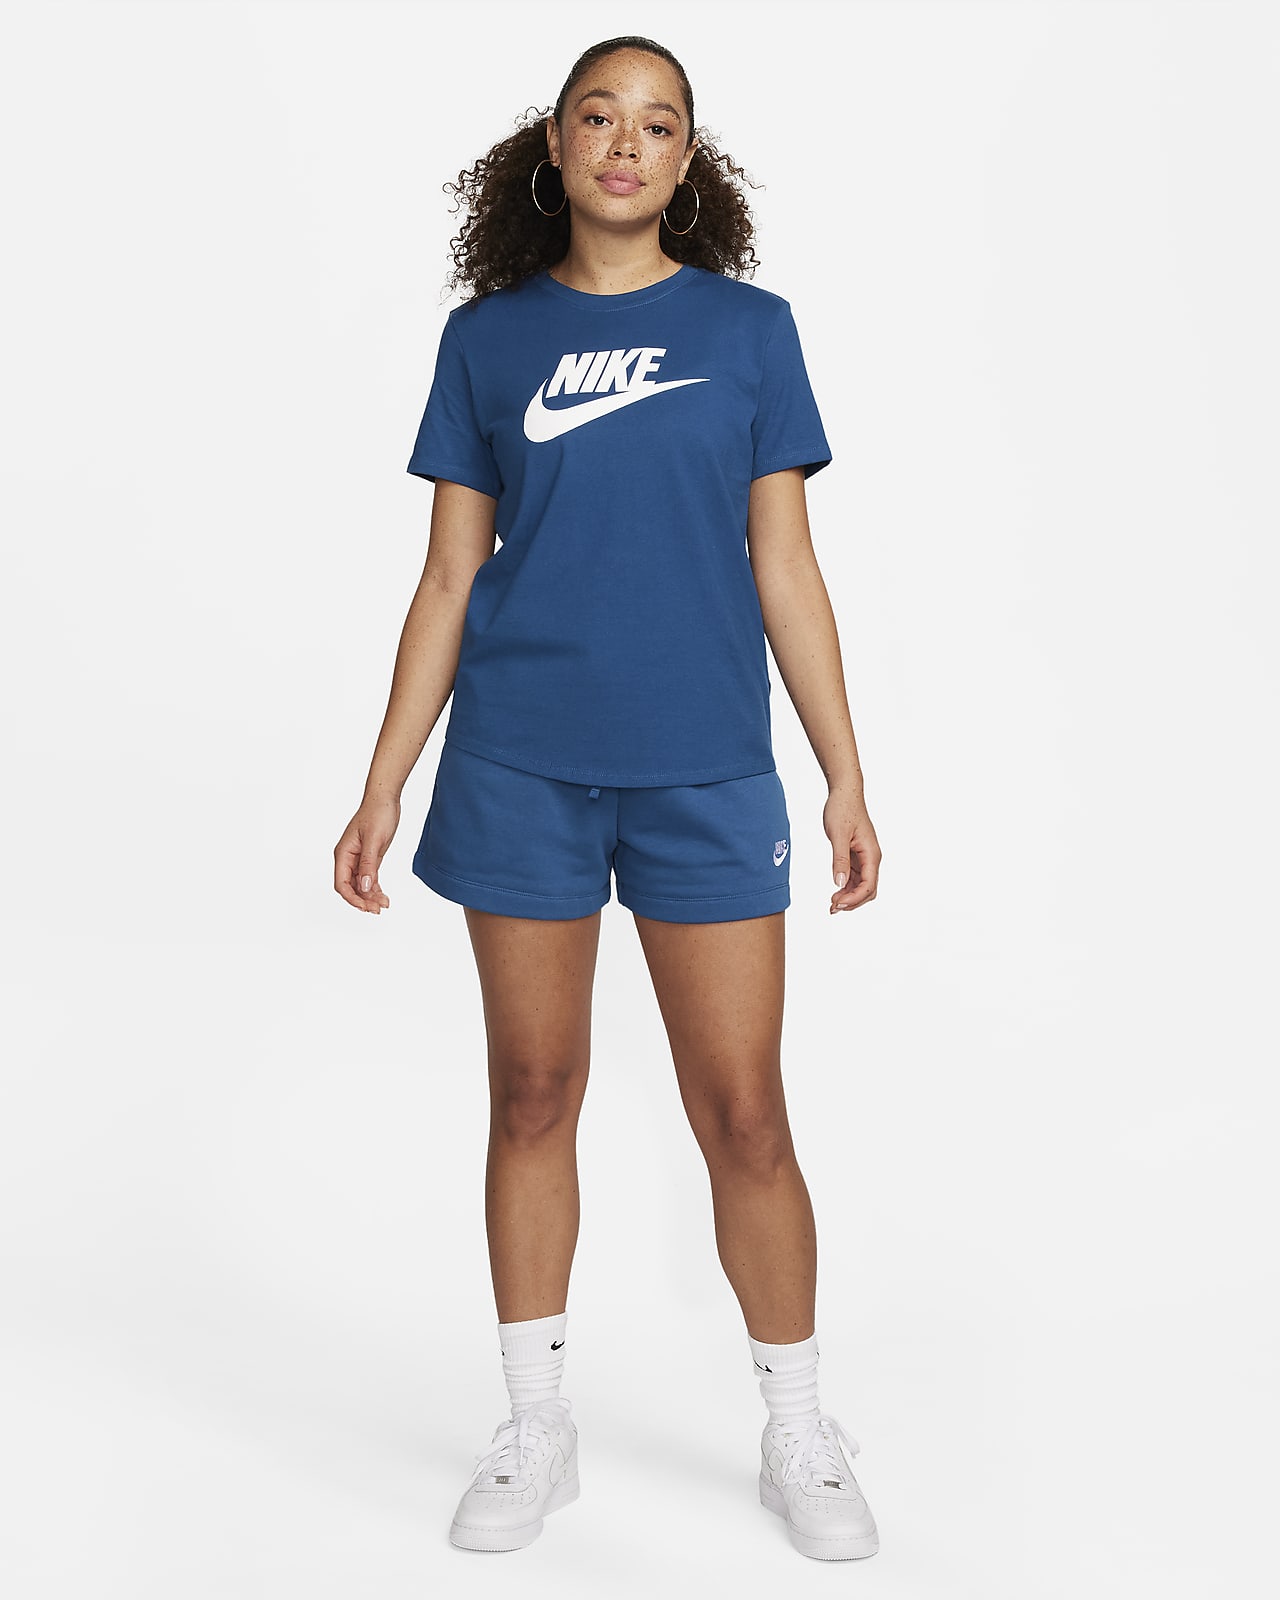 Plus Size Active Sportswear Essential Women's Logo T-Shirt Nike Размер: 1X  купить от 4099 рублей в интернет-магазине , женские блузки и  кофточки Nike